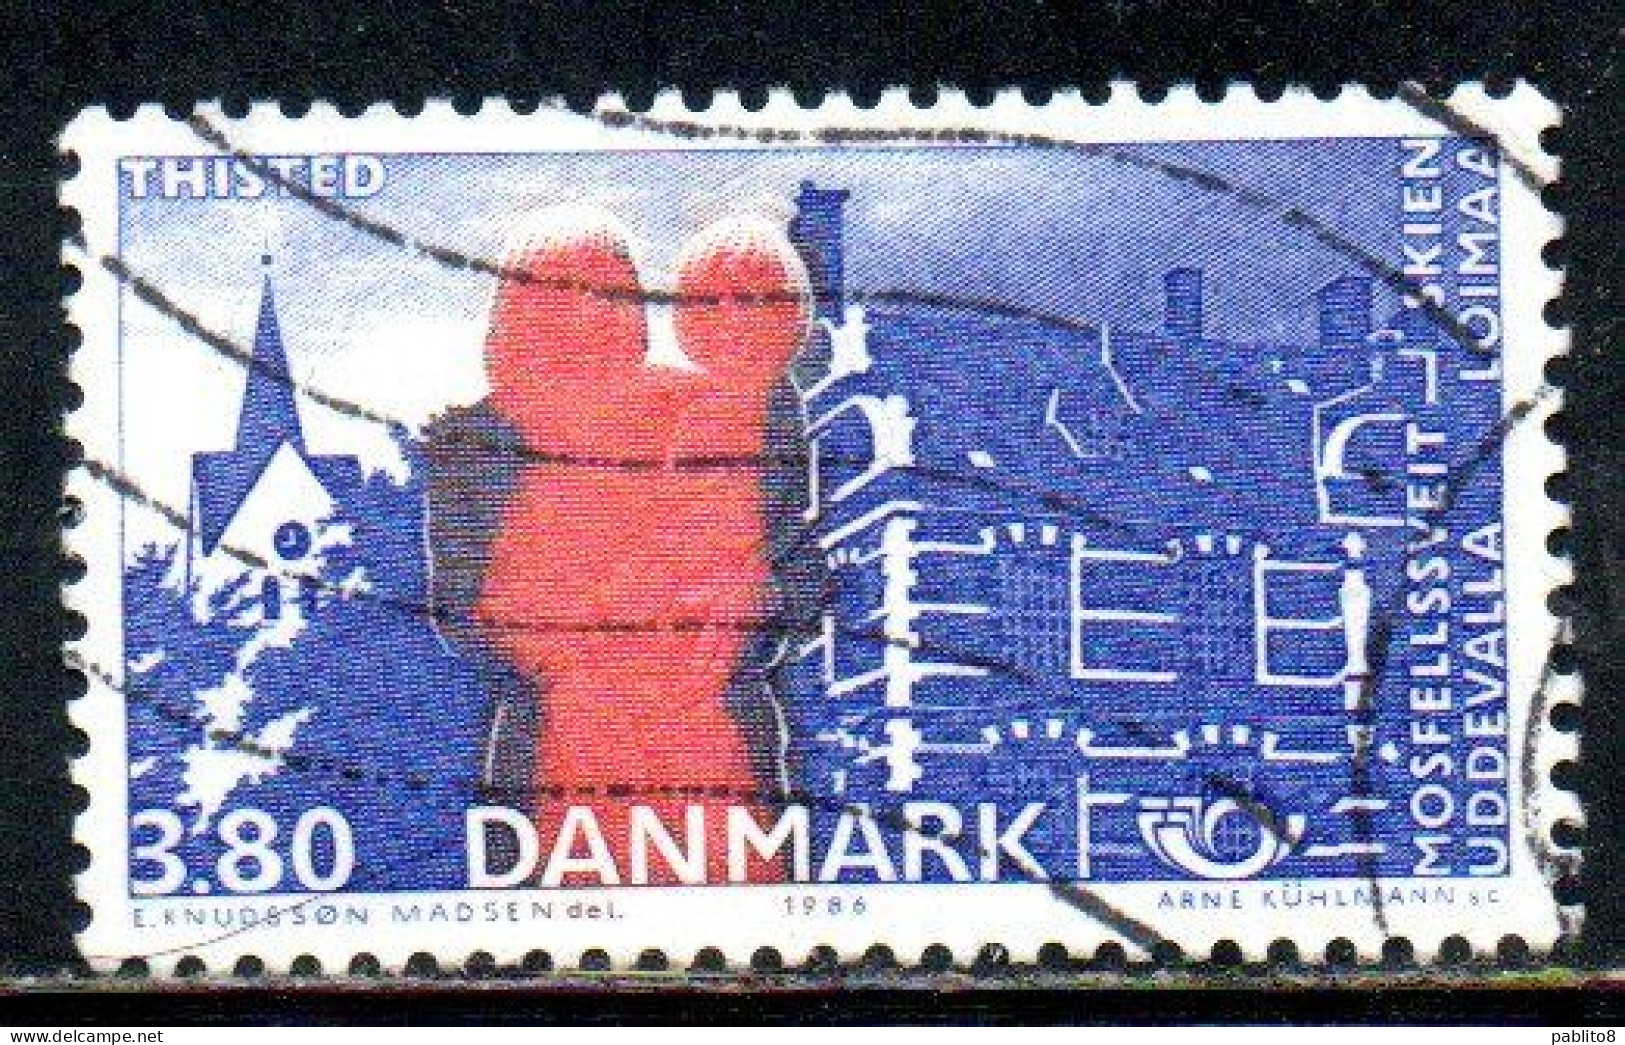 DANEMARK DANMARK DENMARK DANIMARCA 1986 NORDIC COOPERATION ISSUE THISTED CHURCH HARBOR 3.80k USED USATO OBLITERE' - Usati